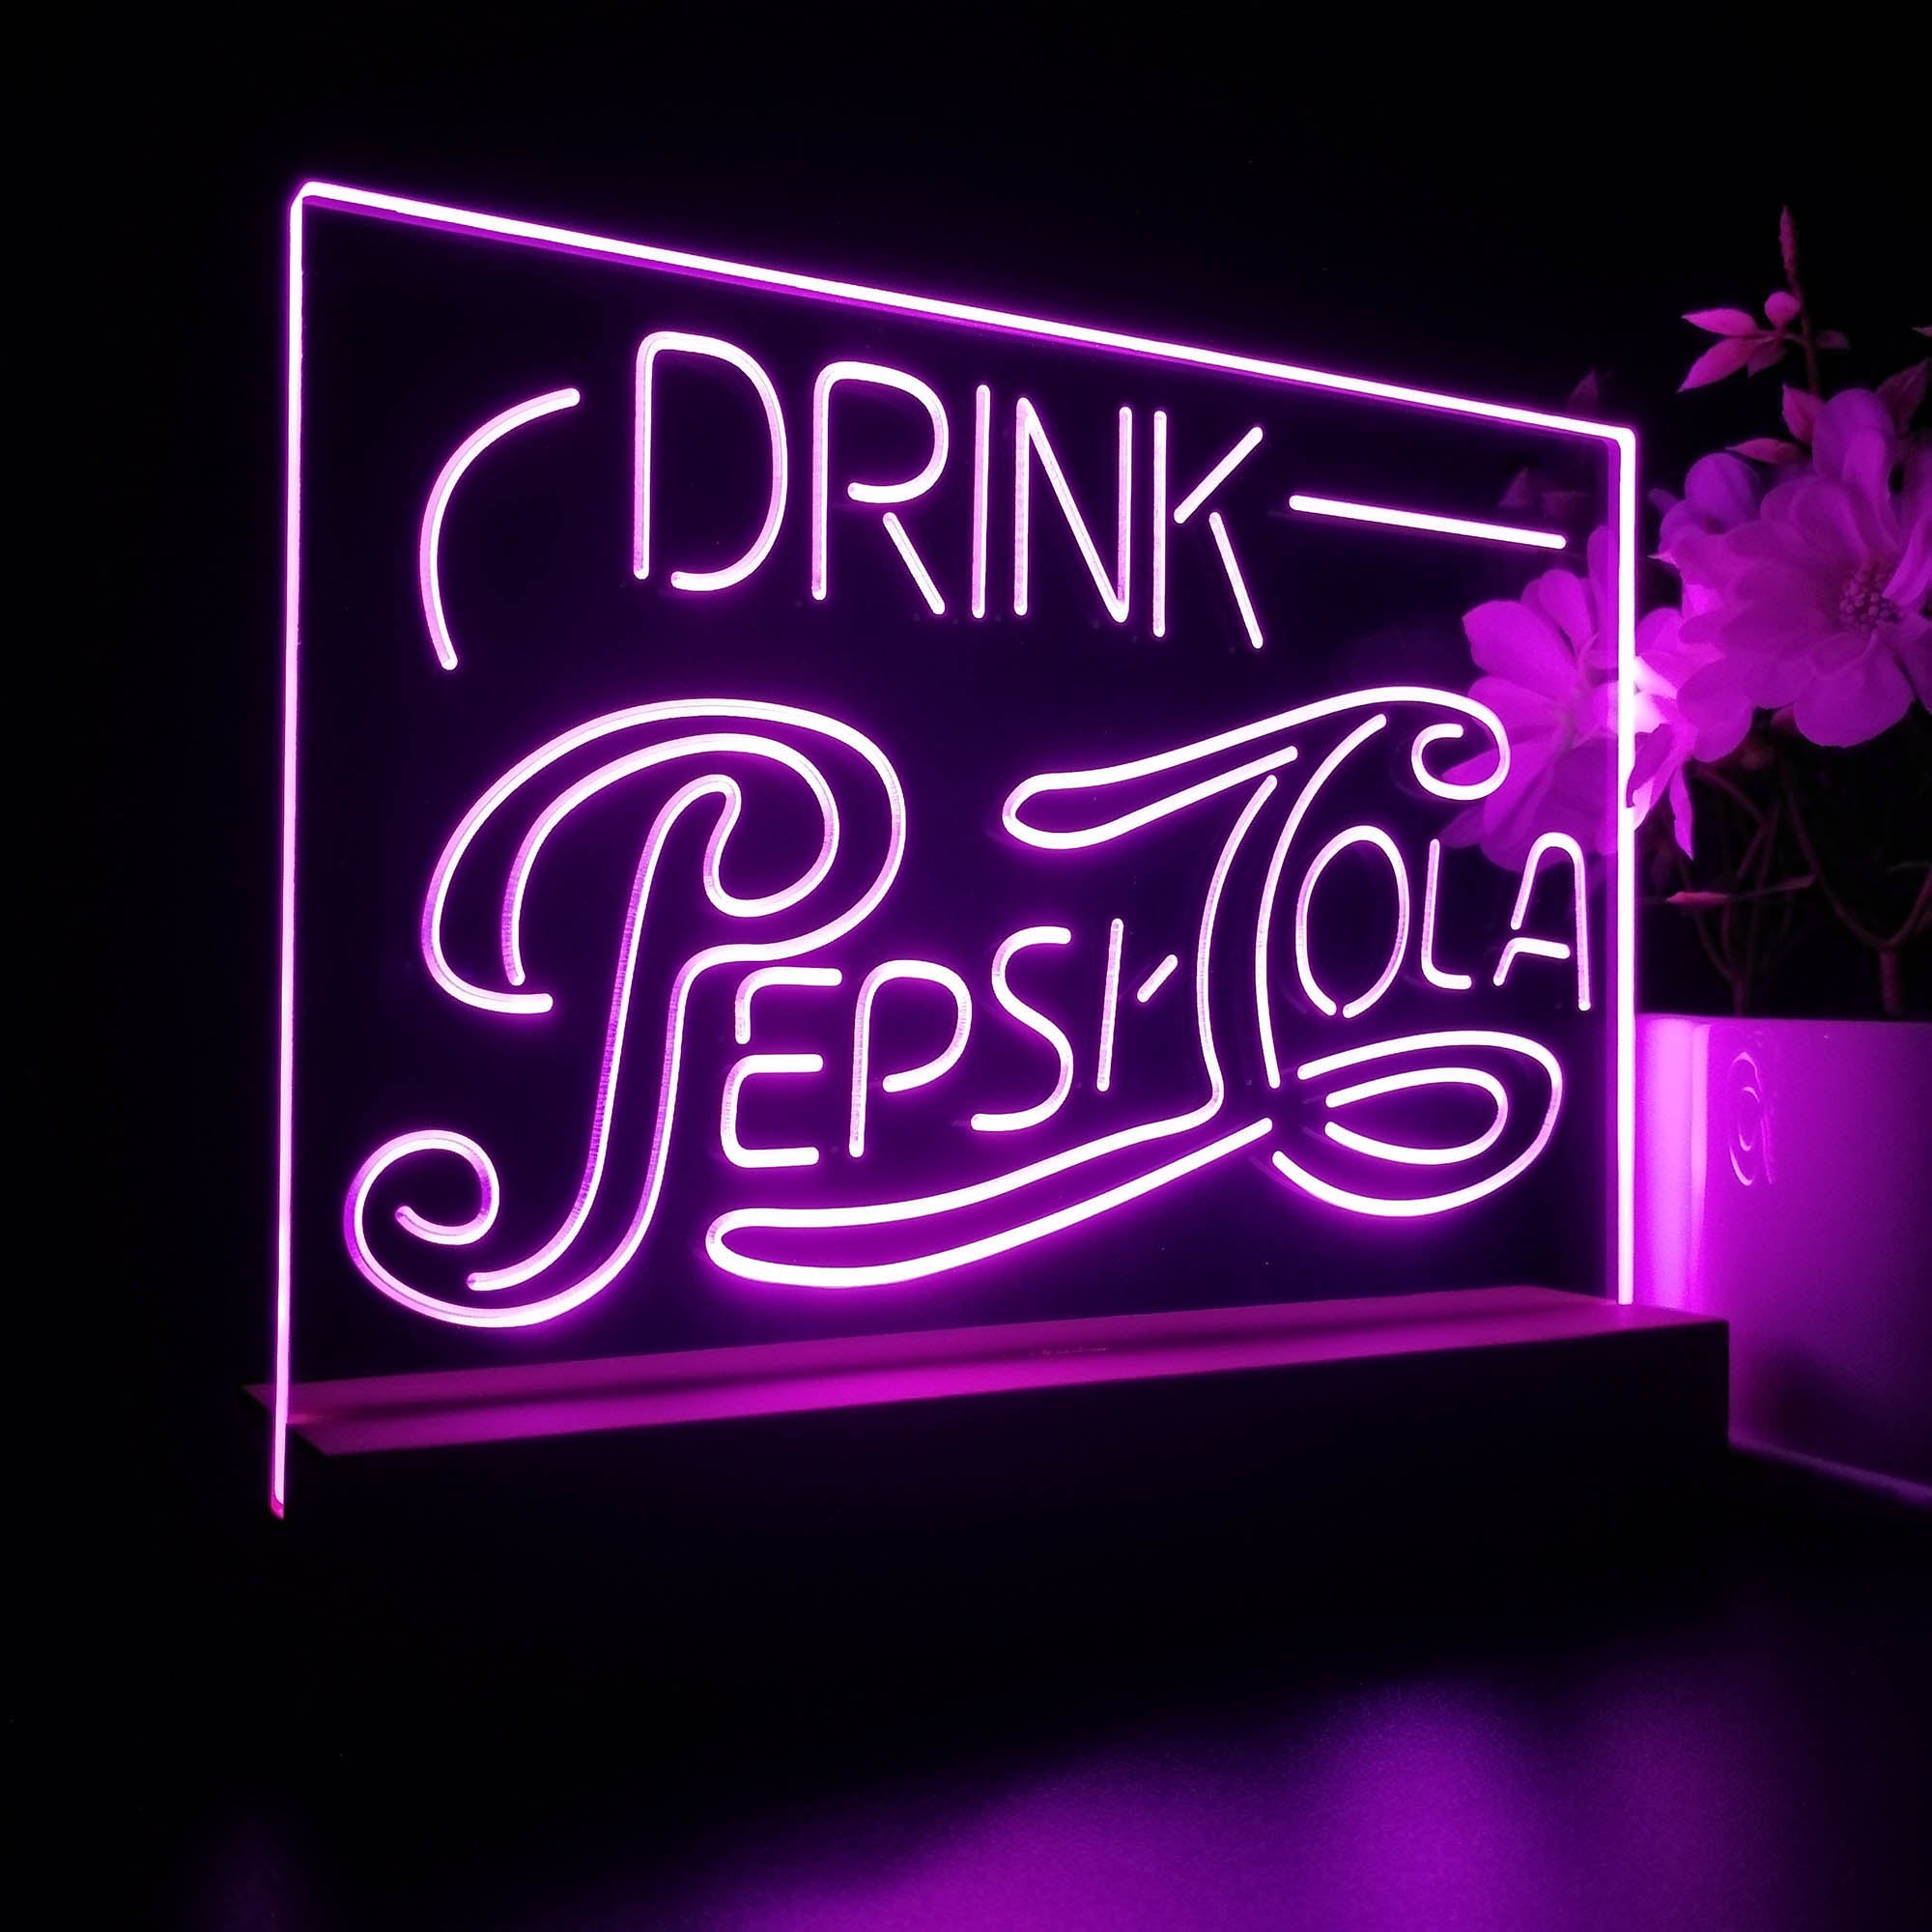 Drink Pepsi Cola Night Light LED Sign